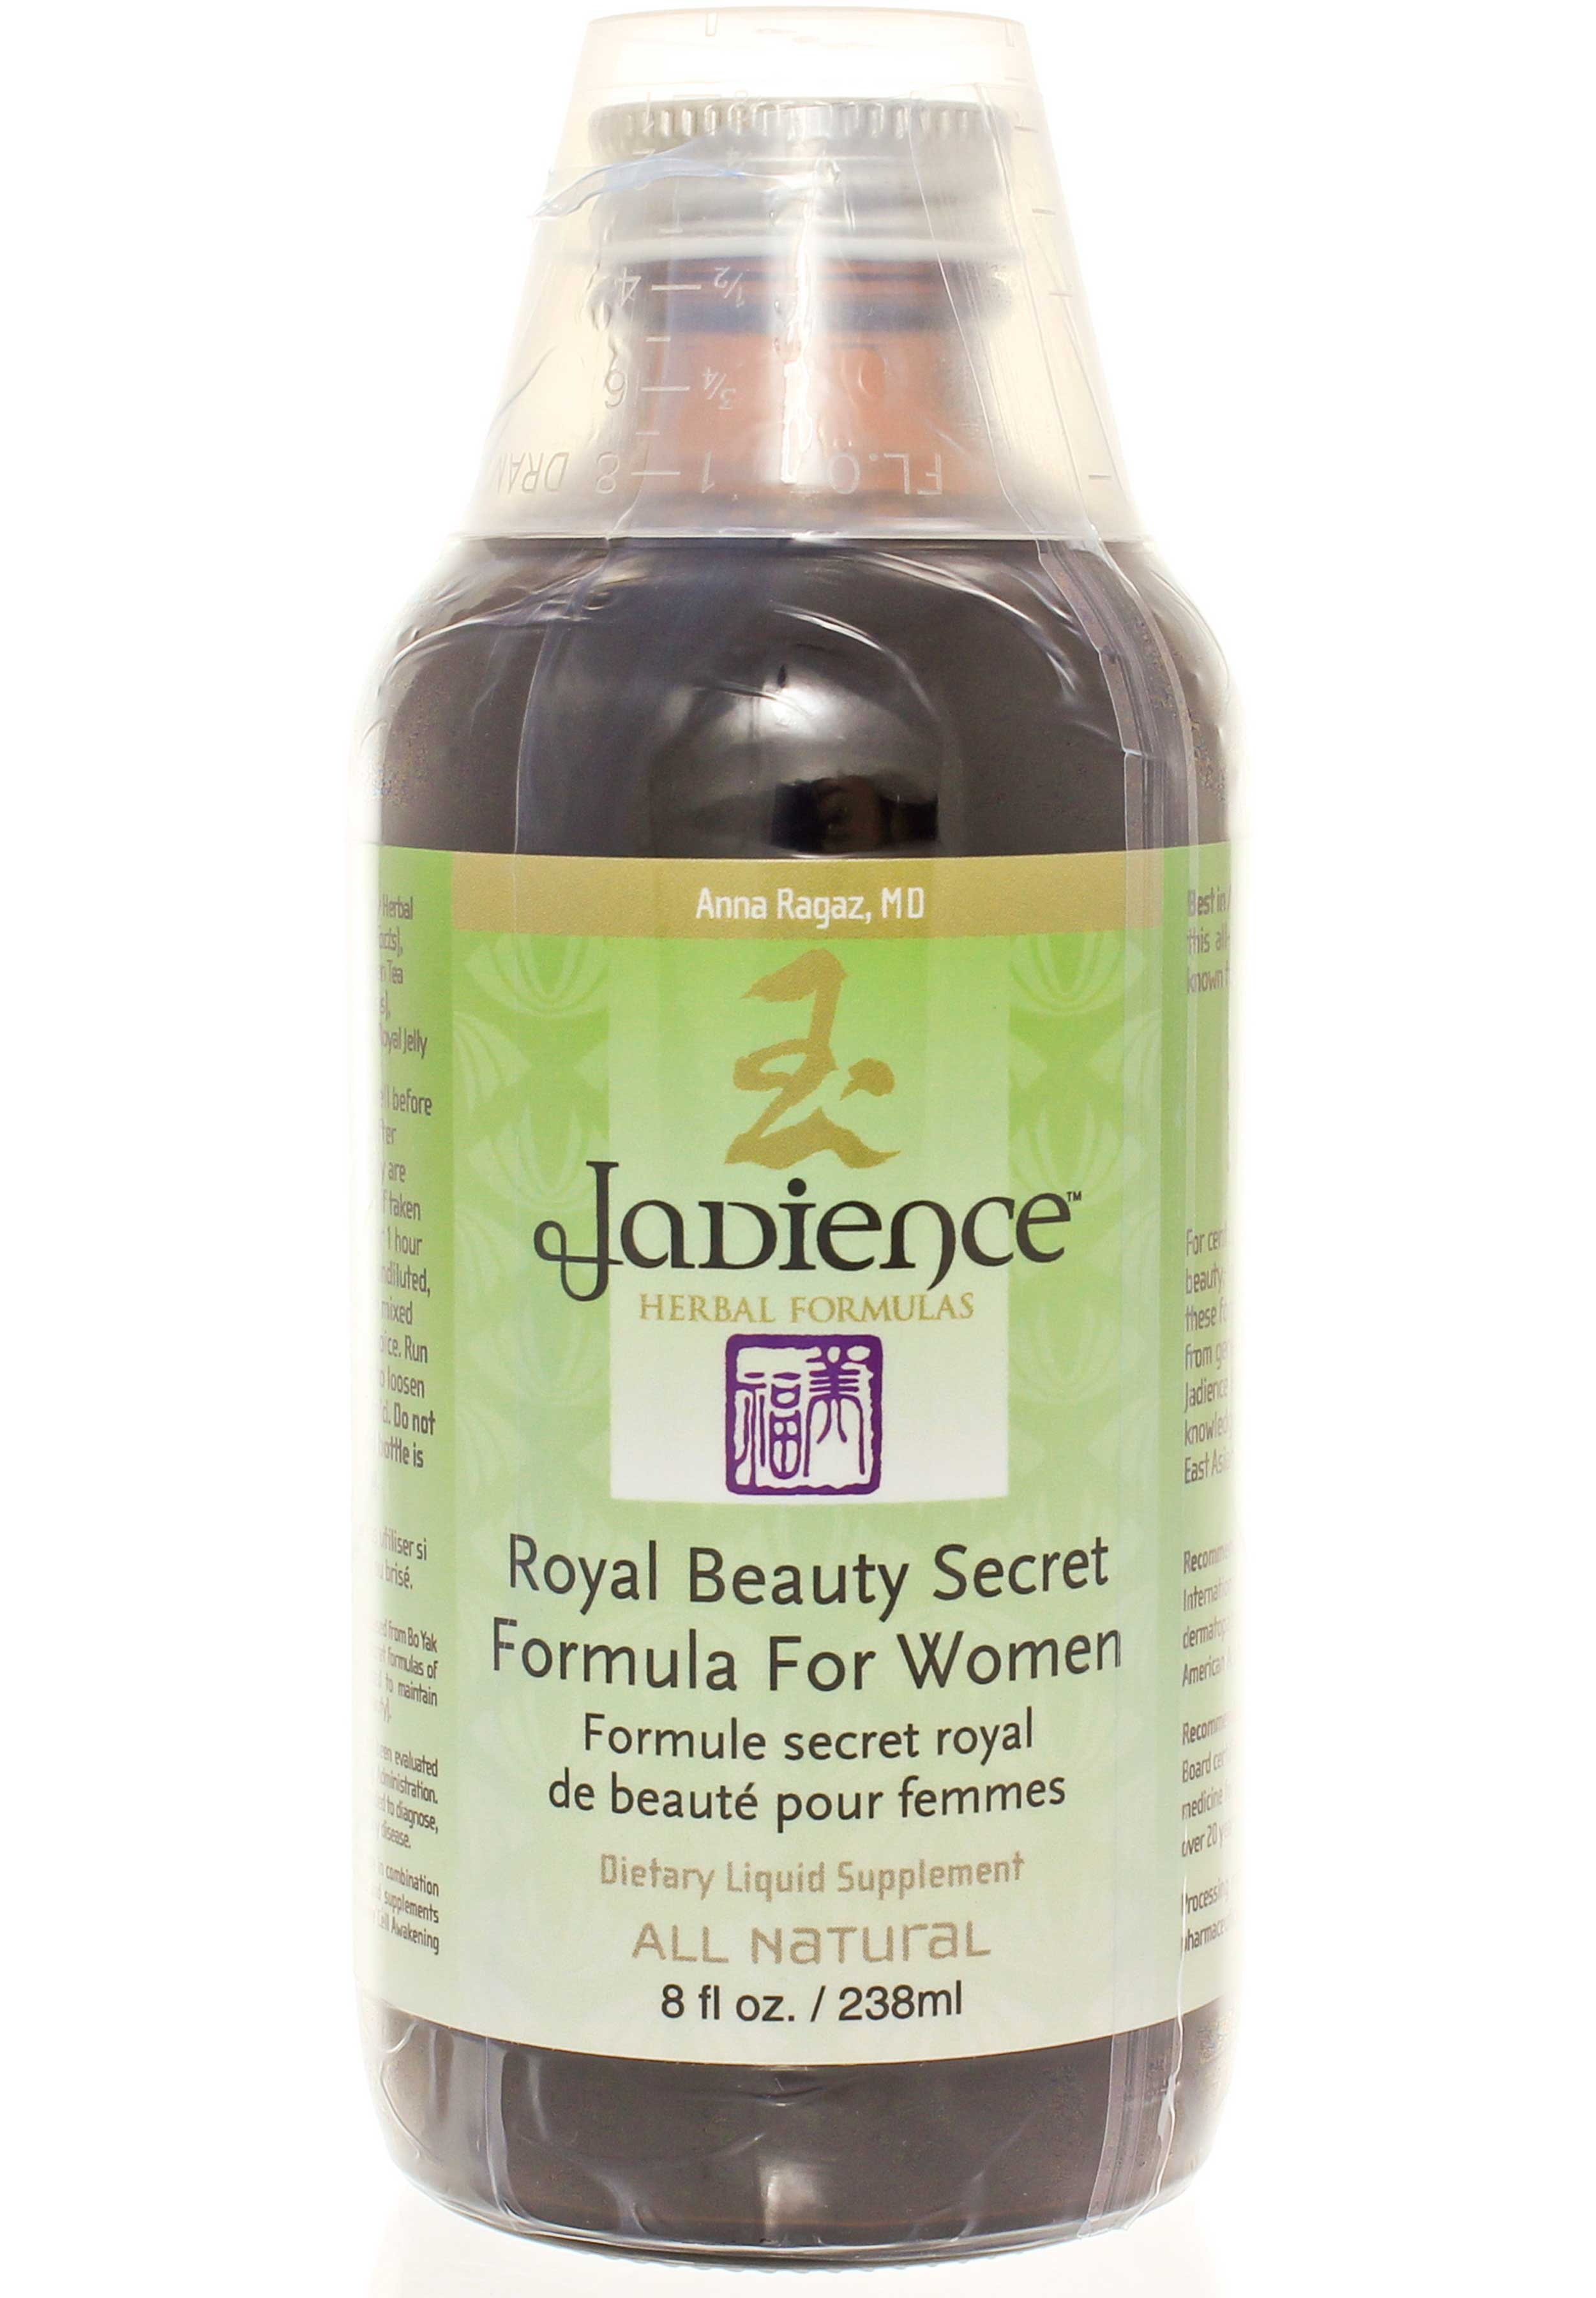 Jadience Herbal Formulas Royal Beauty Secret Formula for Women